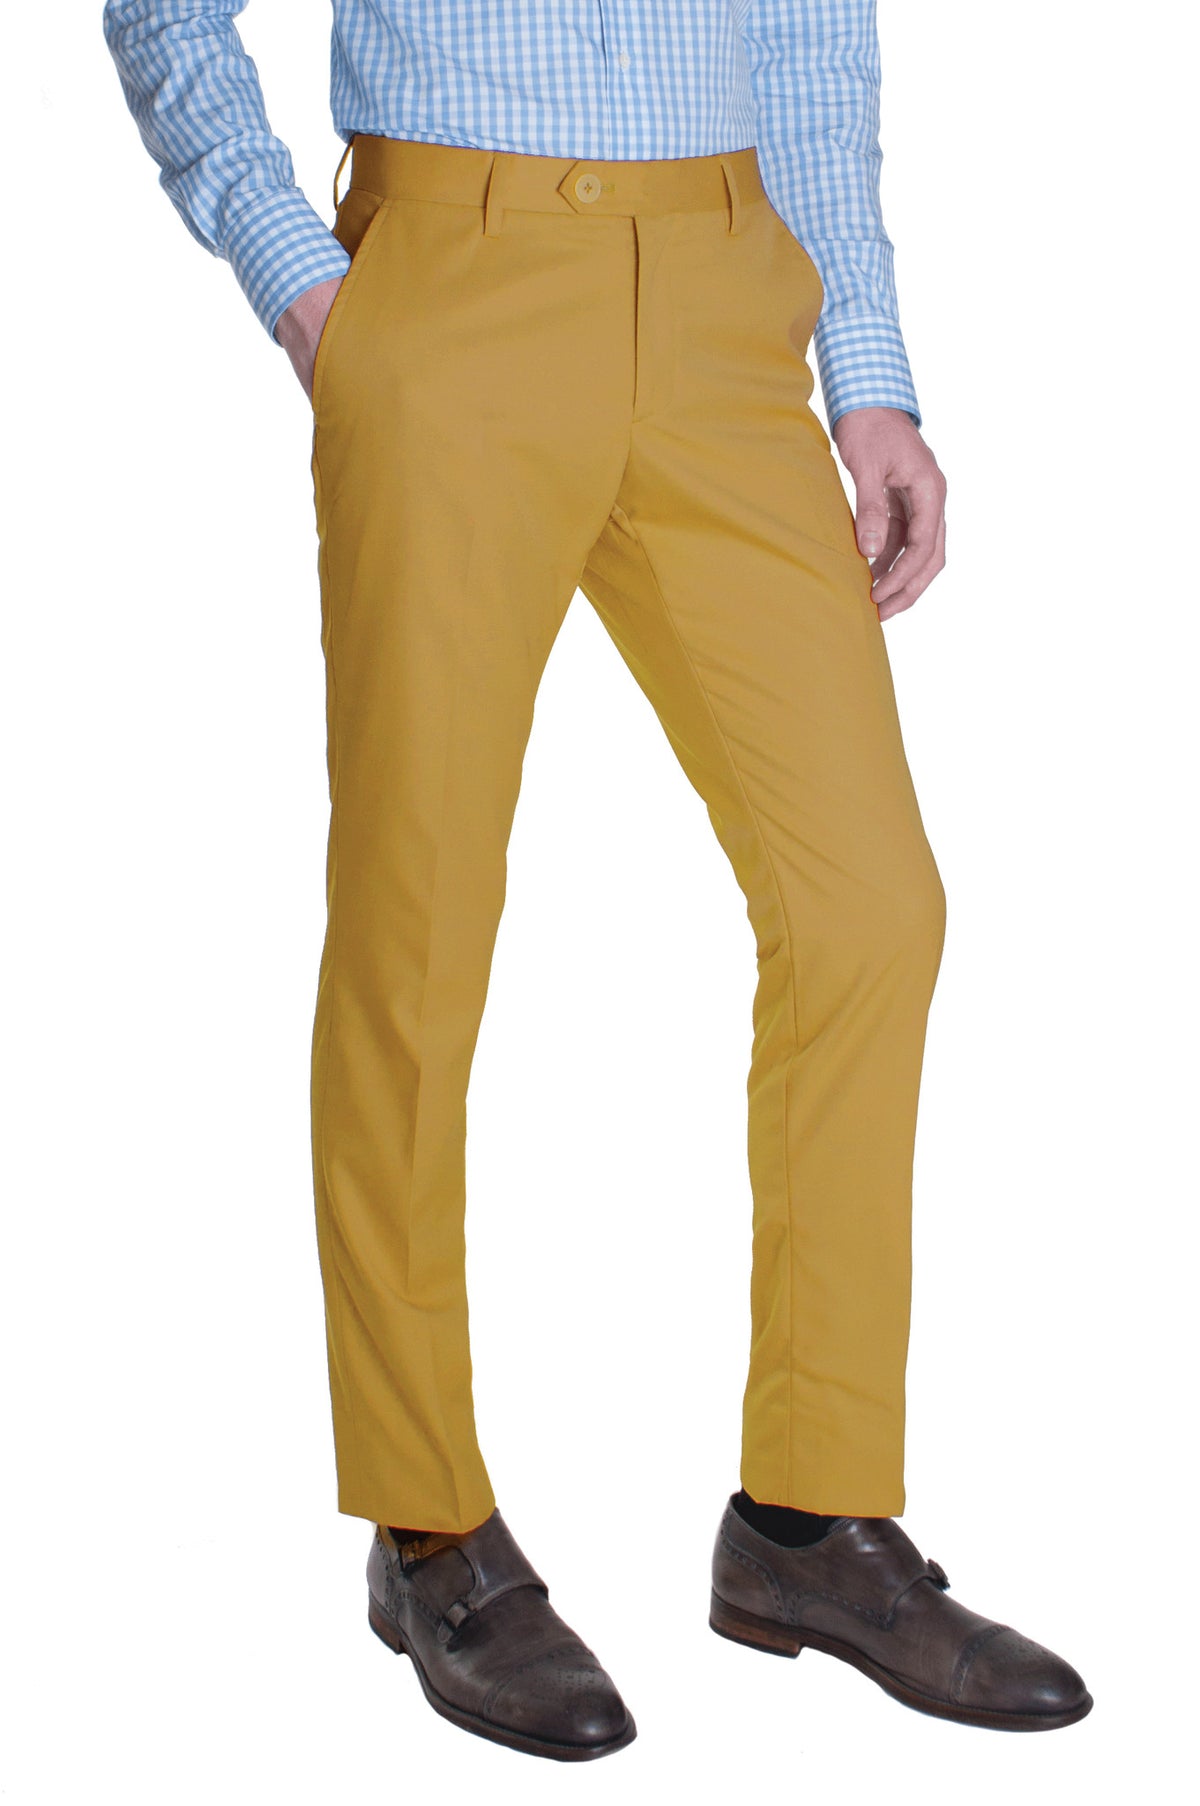 adidas Dress Pants Men's Mustard New with Tags | eBay